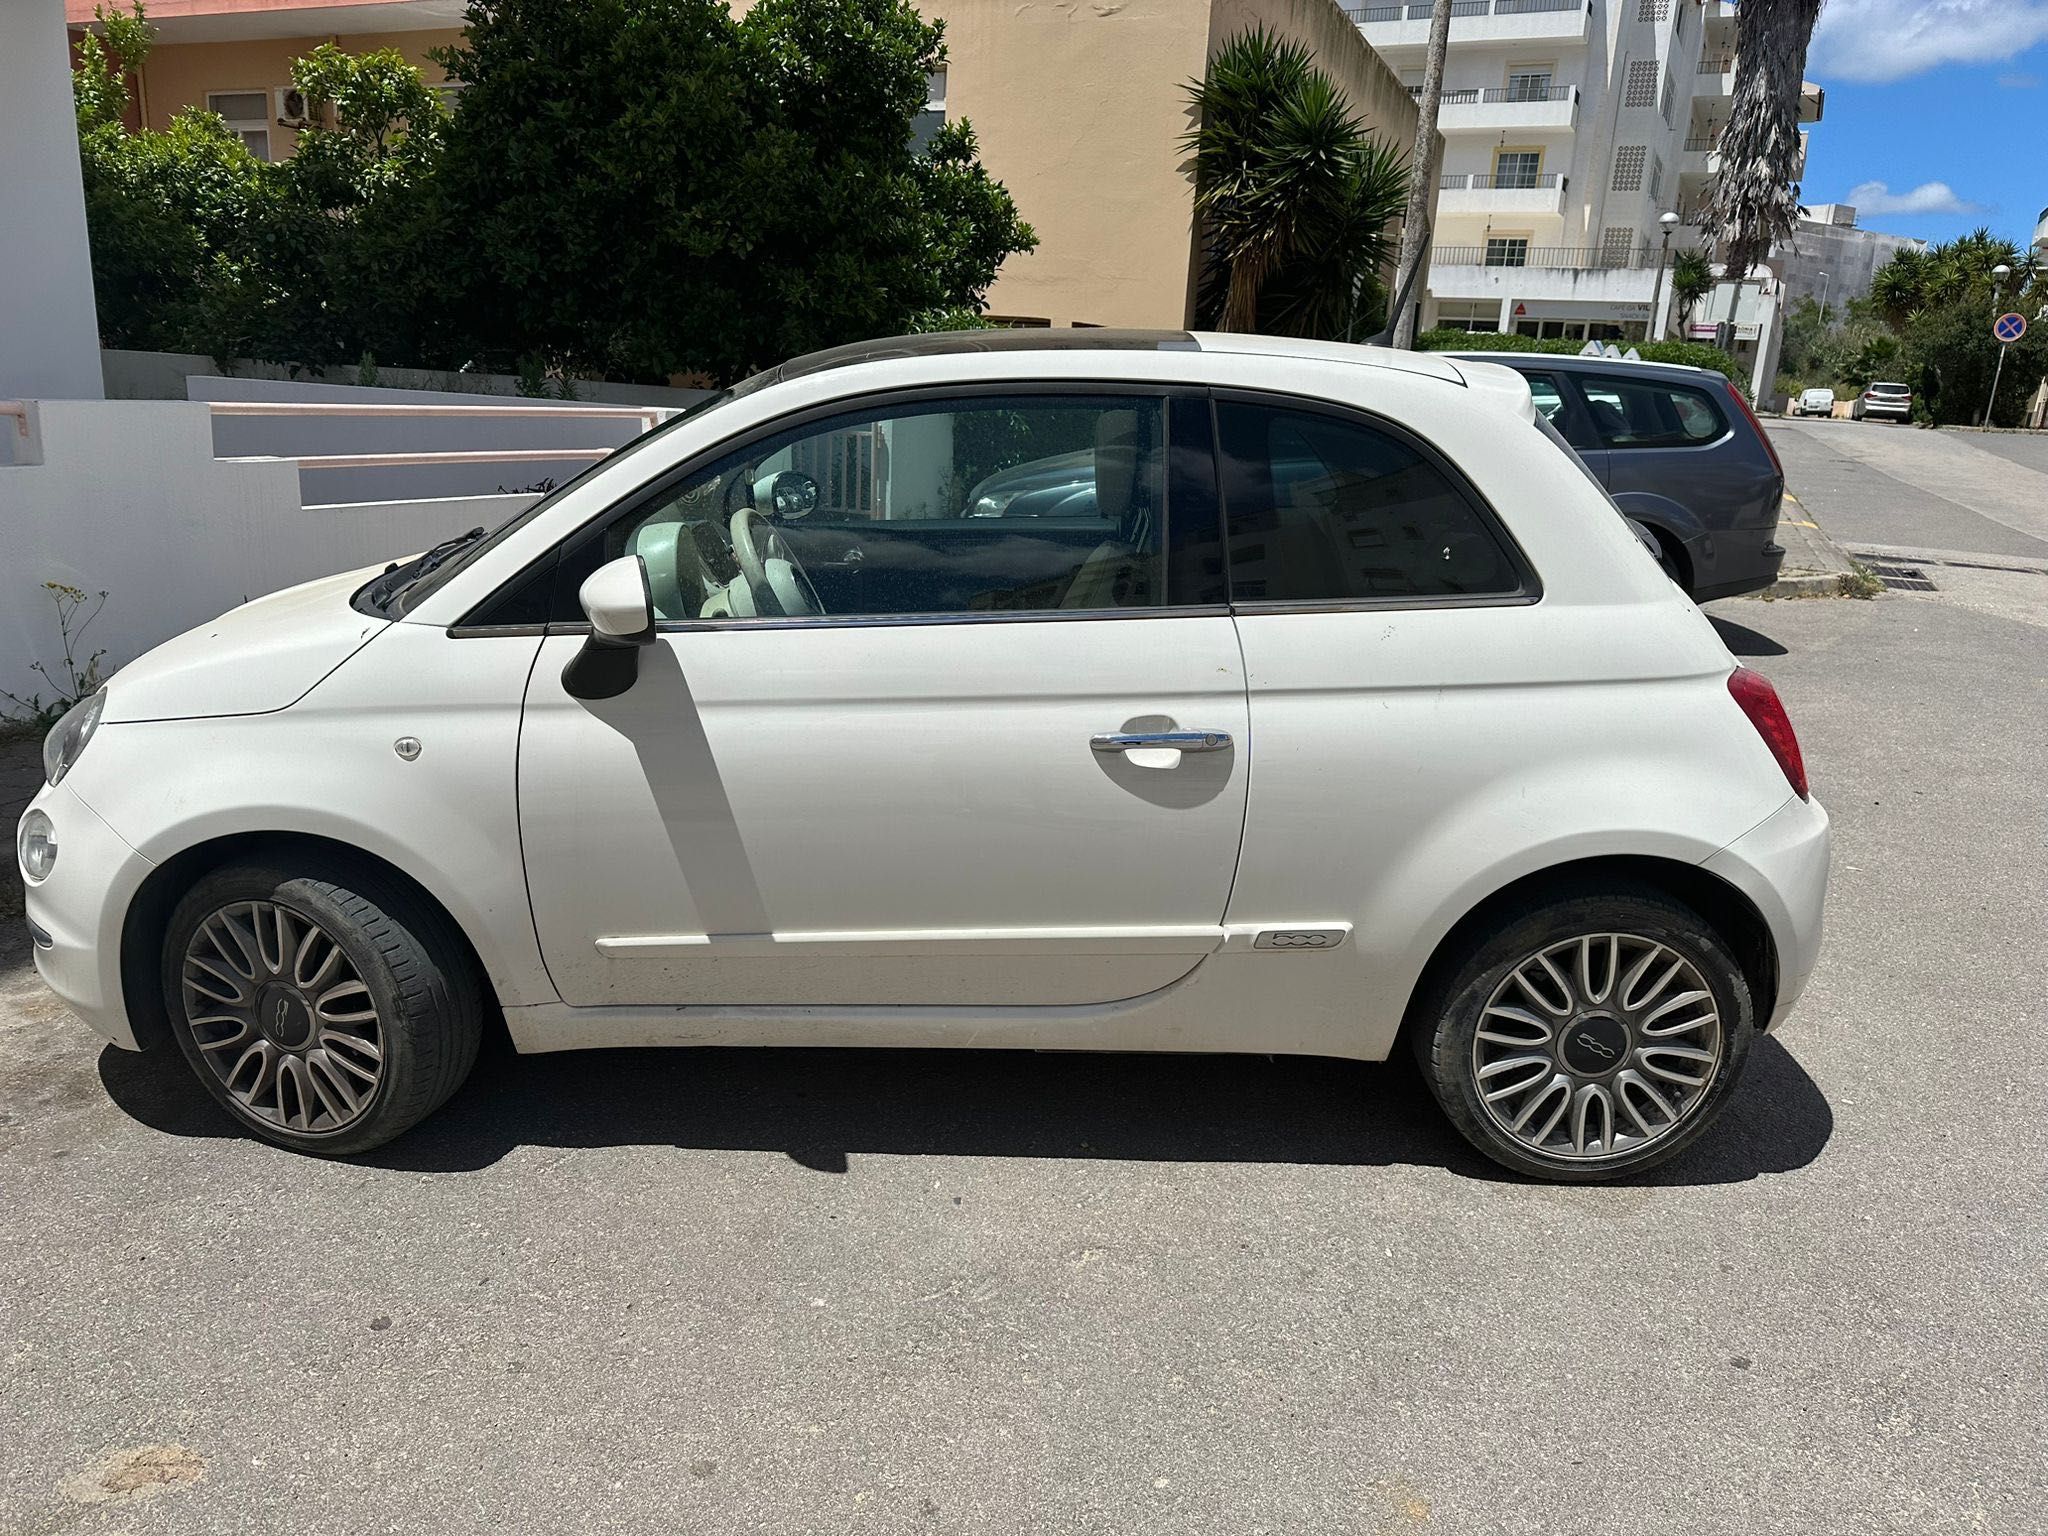 Fiat 500 branco -10000€  com 50mil km